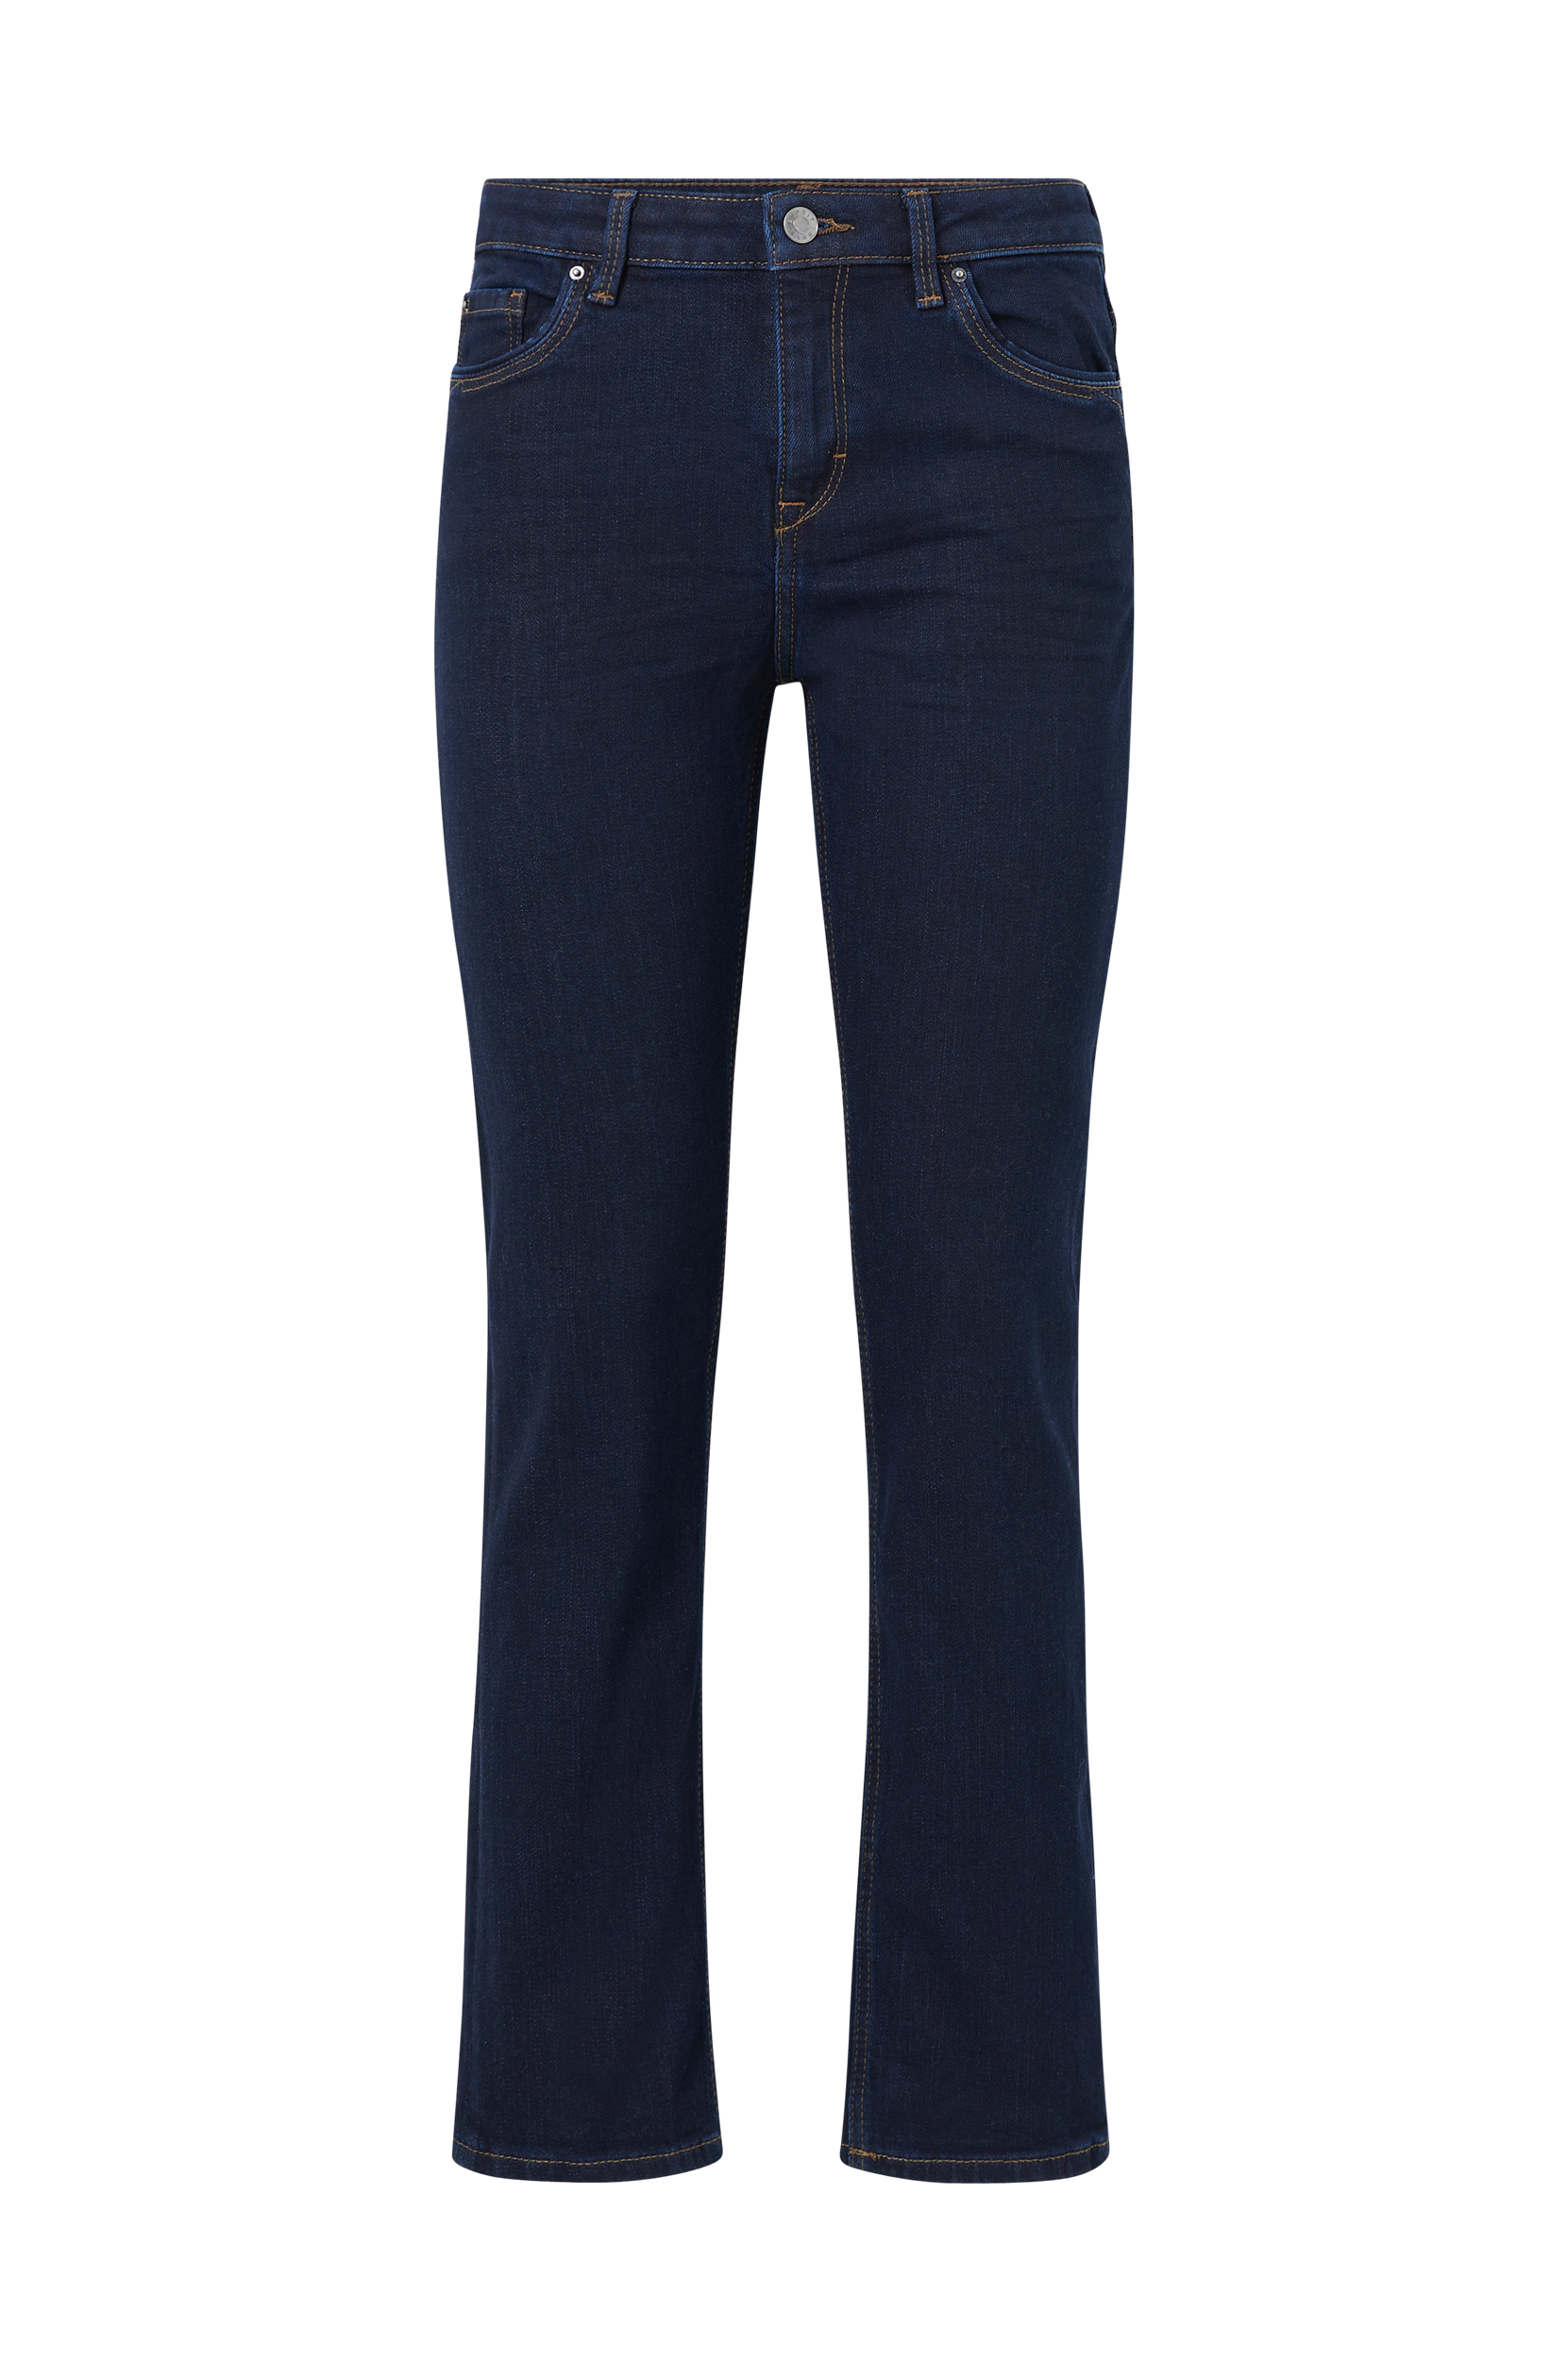 Esprit - Jeans Straight - Blå - W29/L32